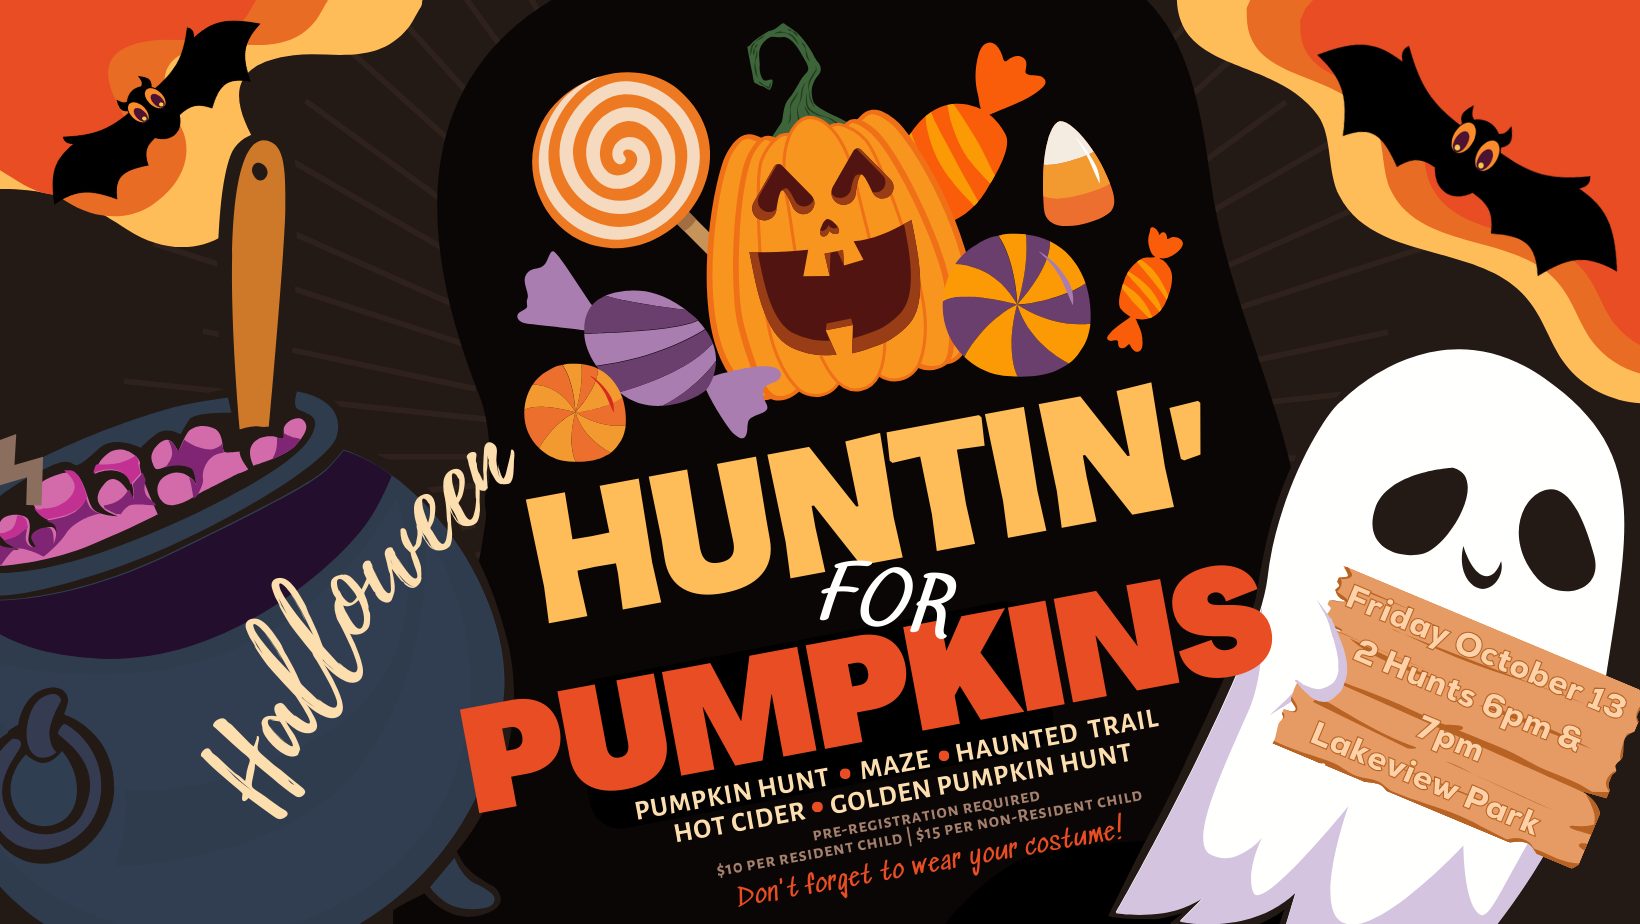 Huntin' for pumpkins poster.